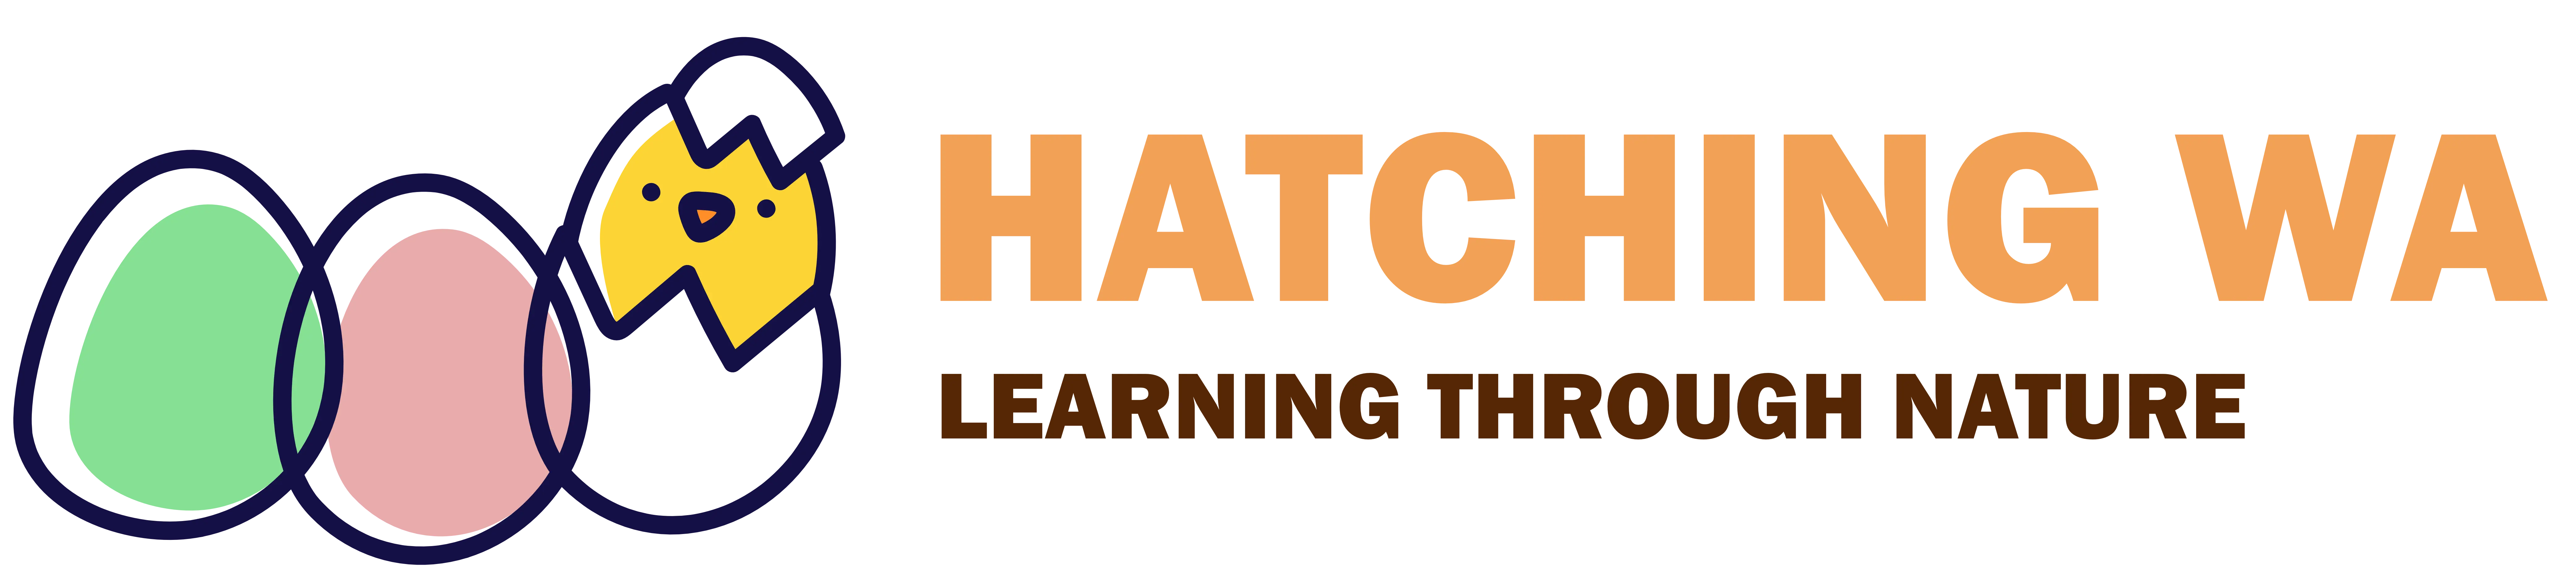 hatching wa logo